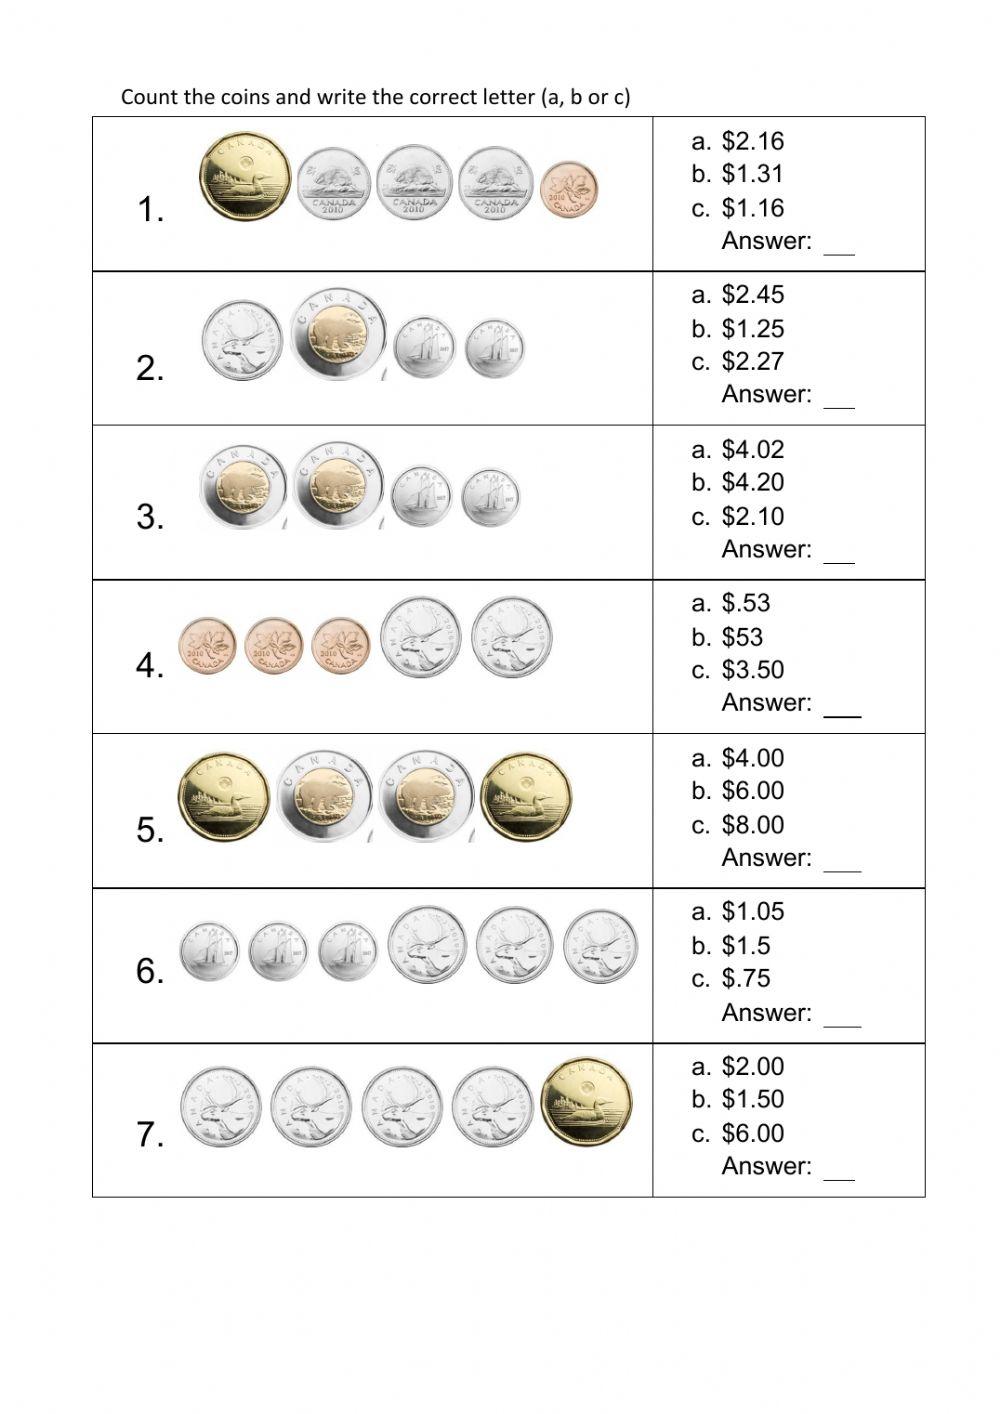 Canadian coins amounts - multiple choice